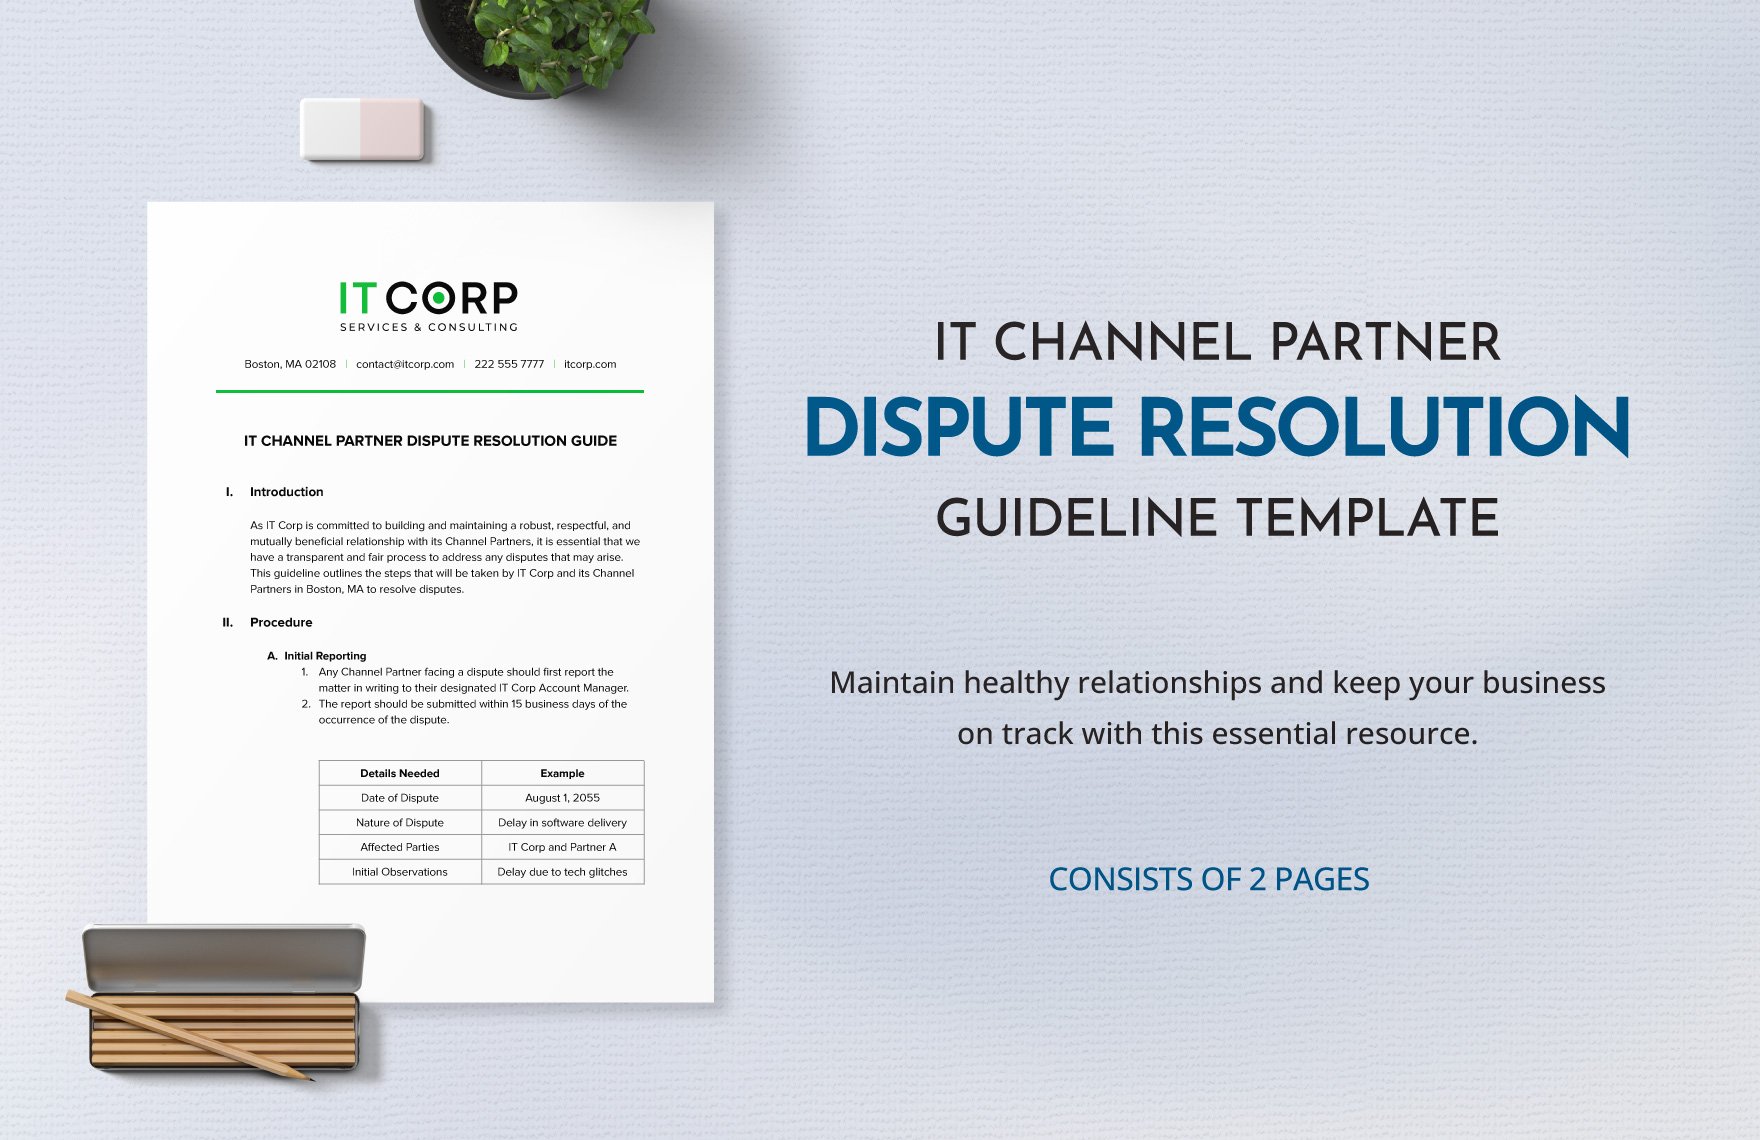 IT Channel Partner Dispute Resolution Guideline Template in Word, Google Docs, PDF